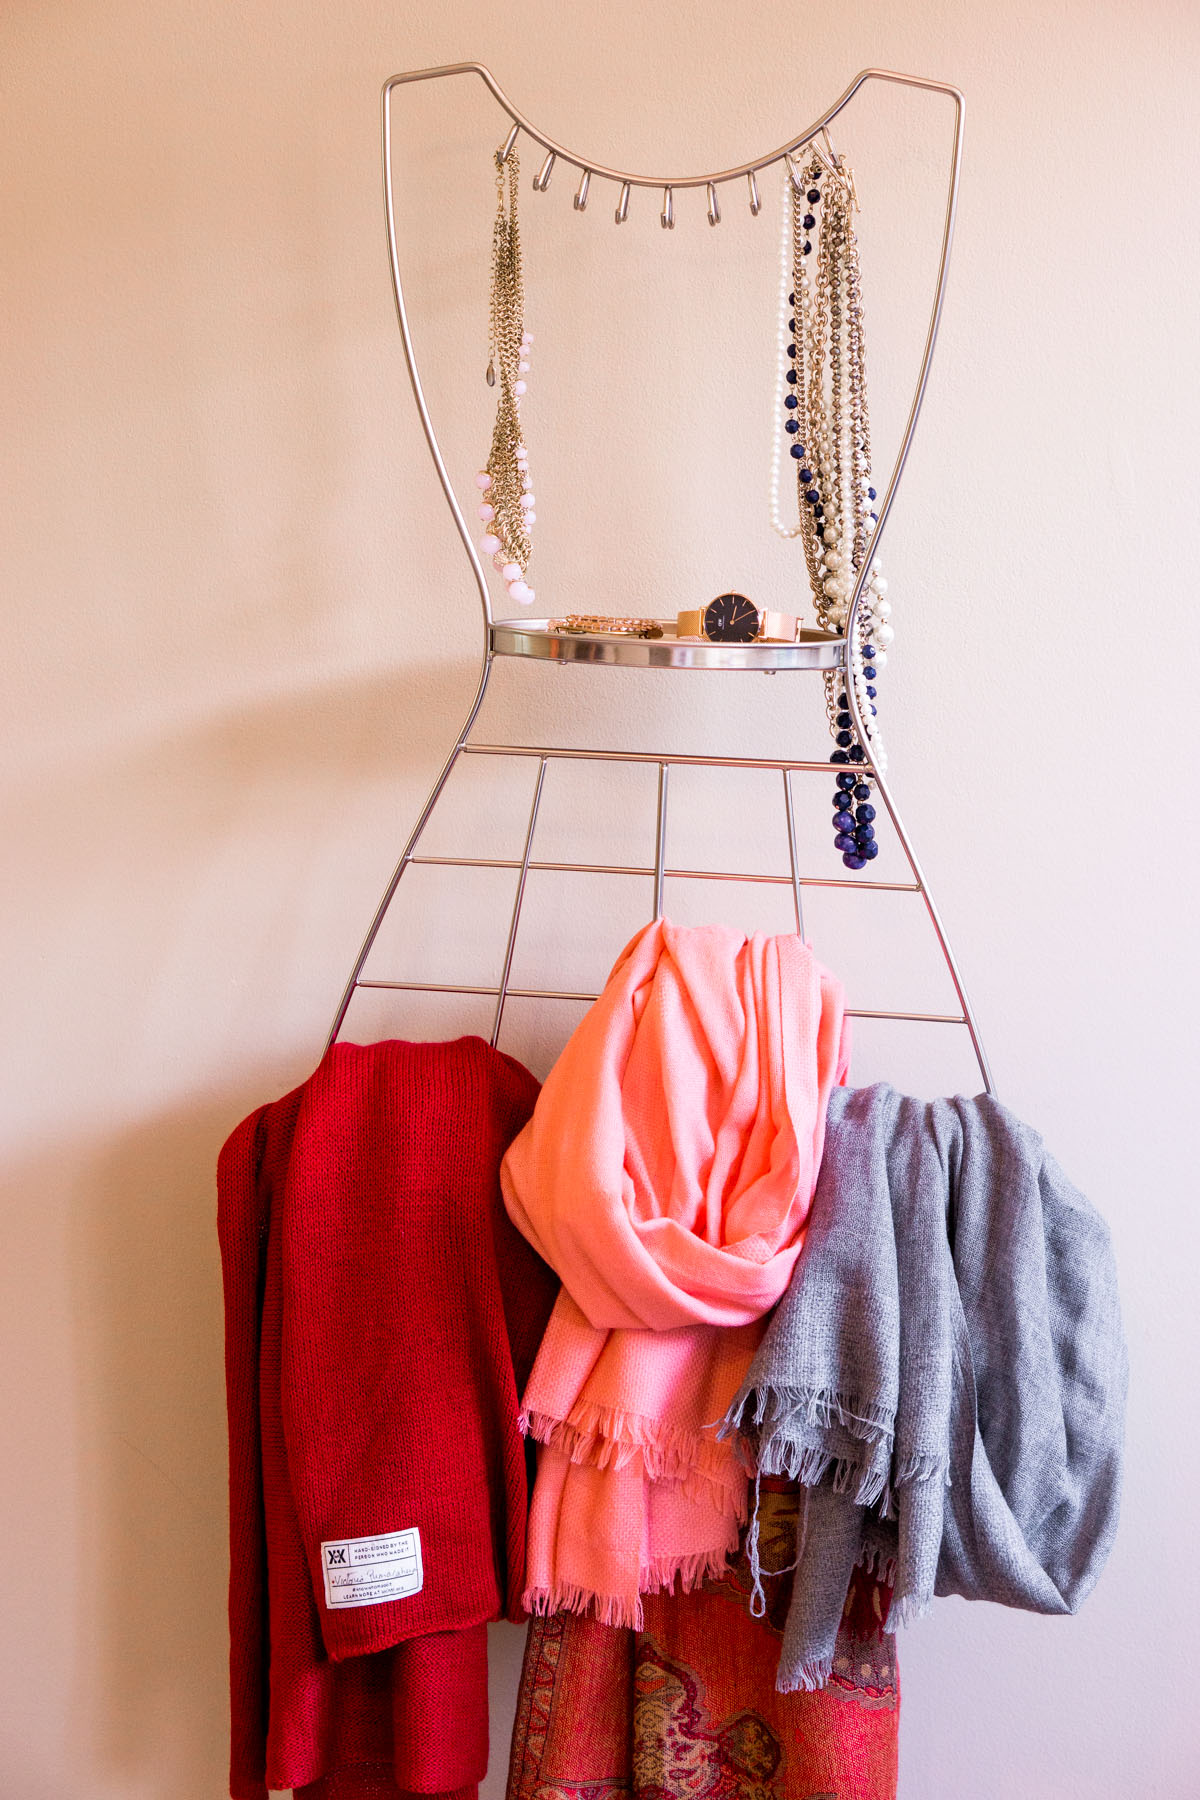 Best Petite Hangers & Closet Accessories